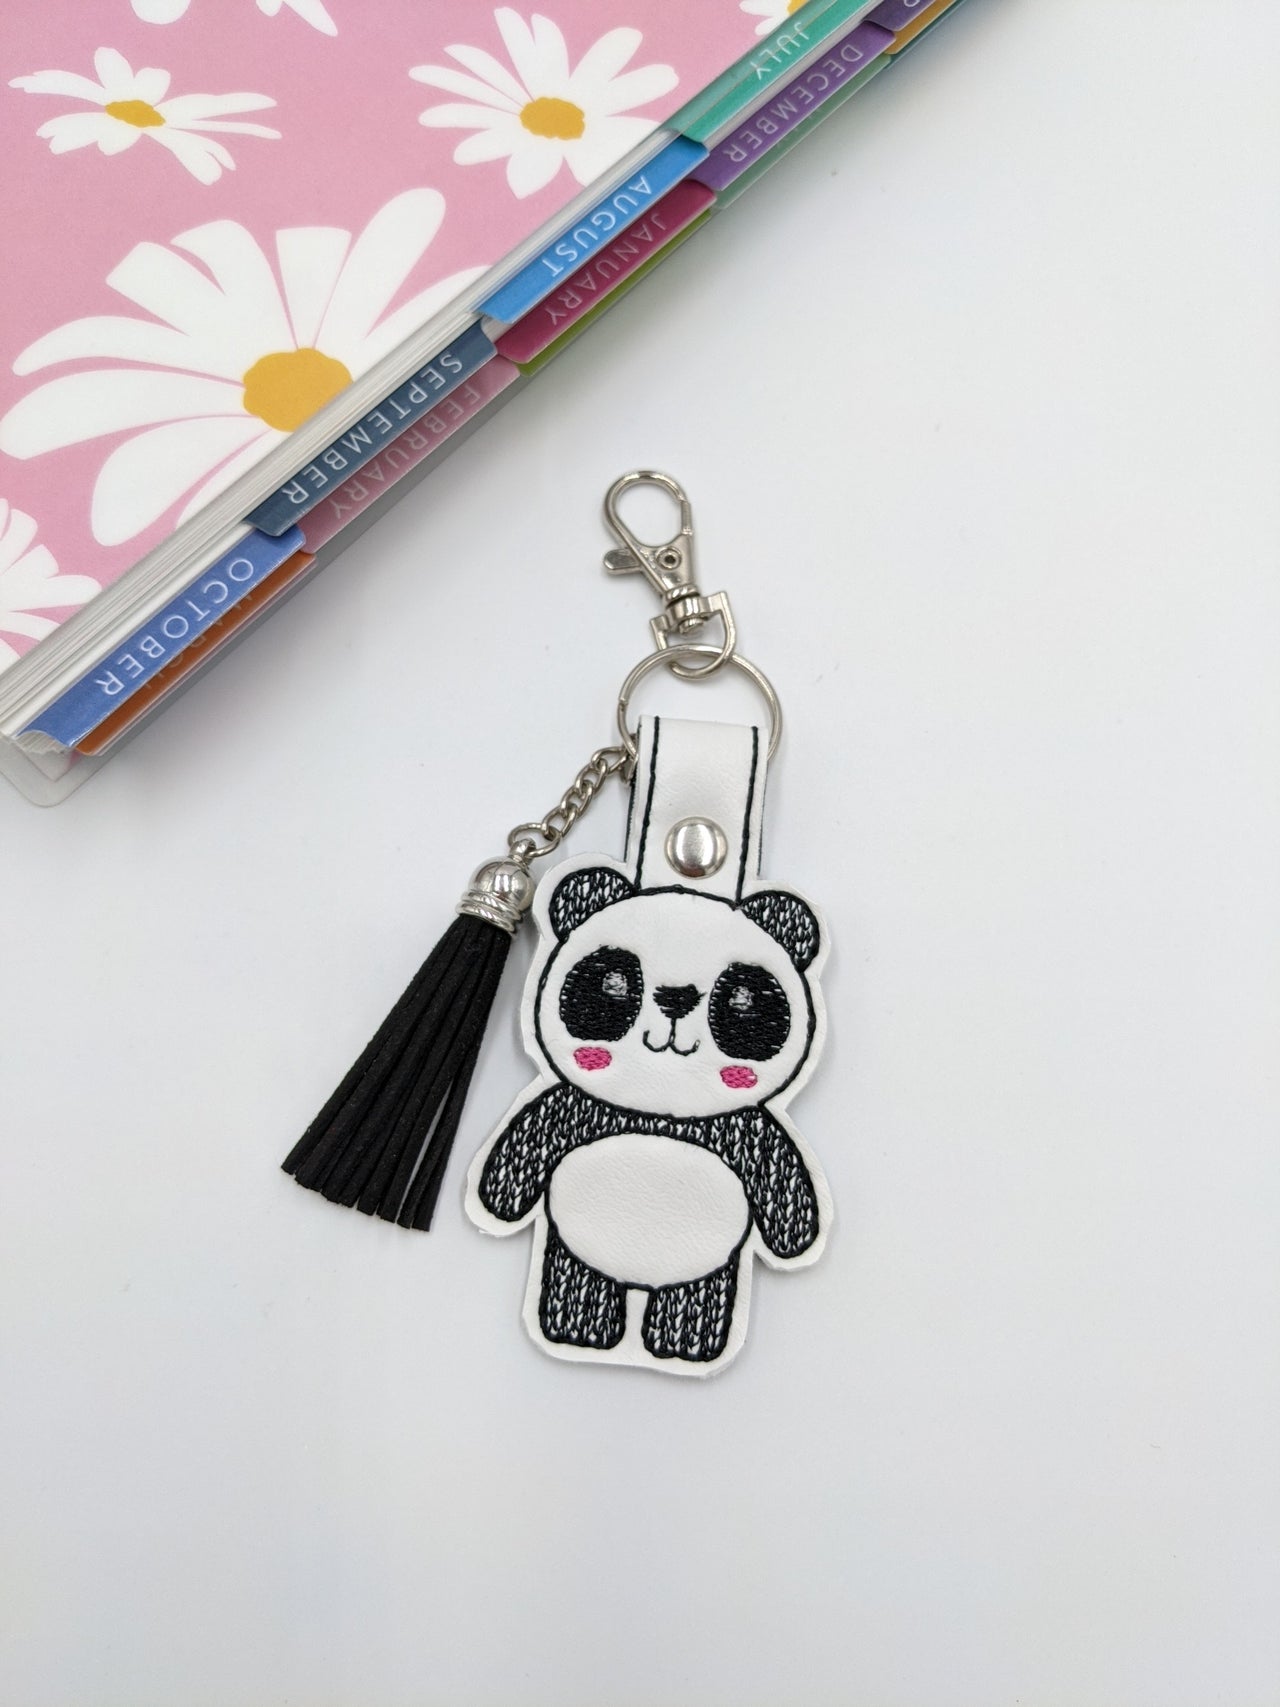 Panda Keychain